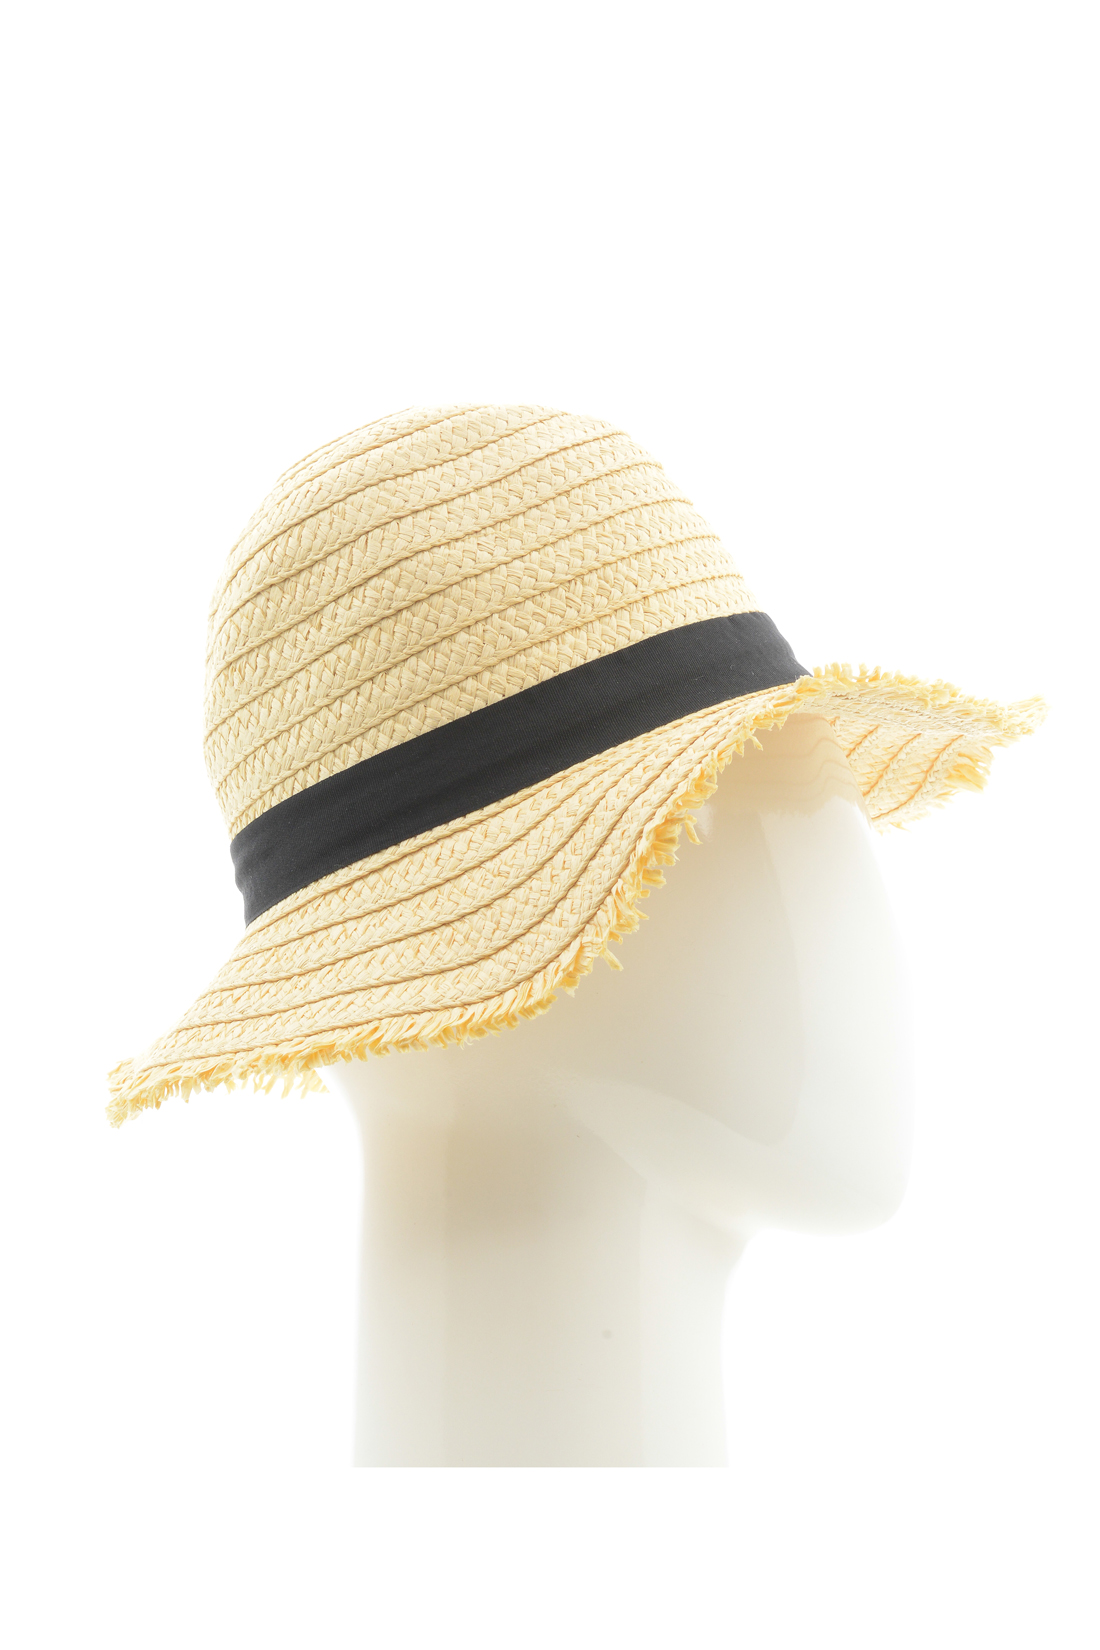 Шляпа с бахромой по краям (арт. baon B348002), размер Б/р 56, цвет бежевый Шляпа с бахромой по краям (арт. baon B348002) - фото 2